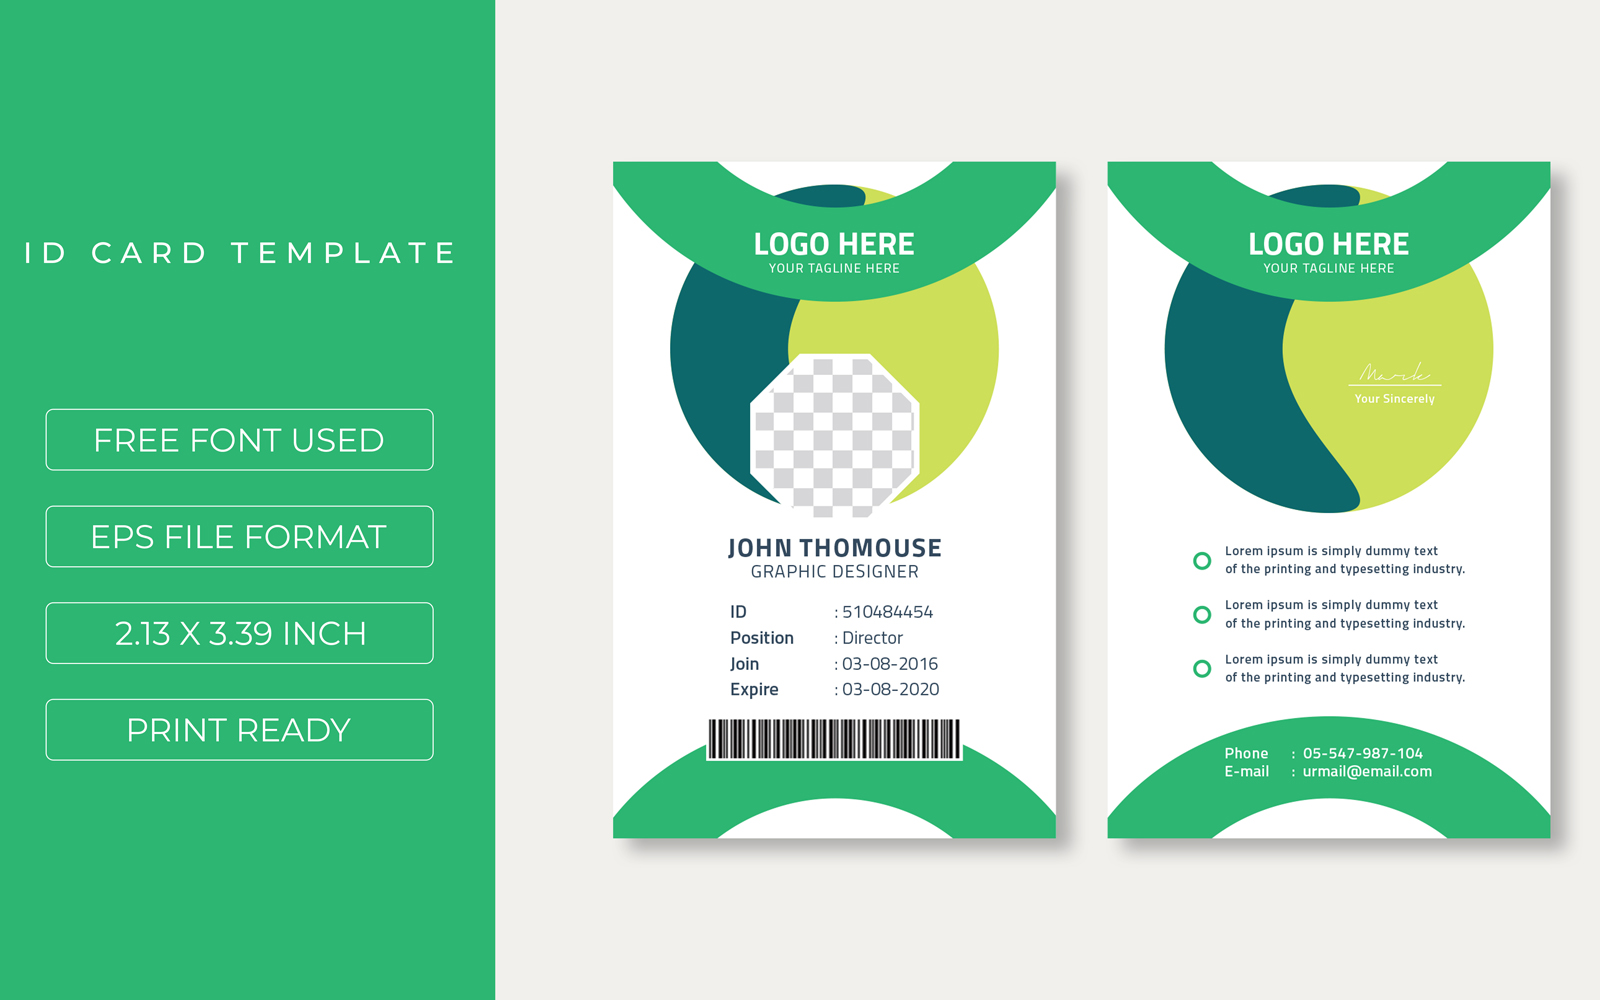 Graphic Designer Id Card Corporate Identity Template Theme